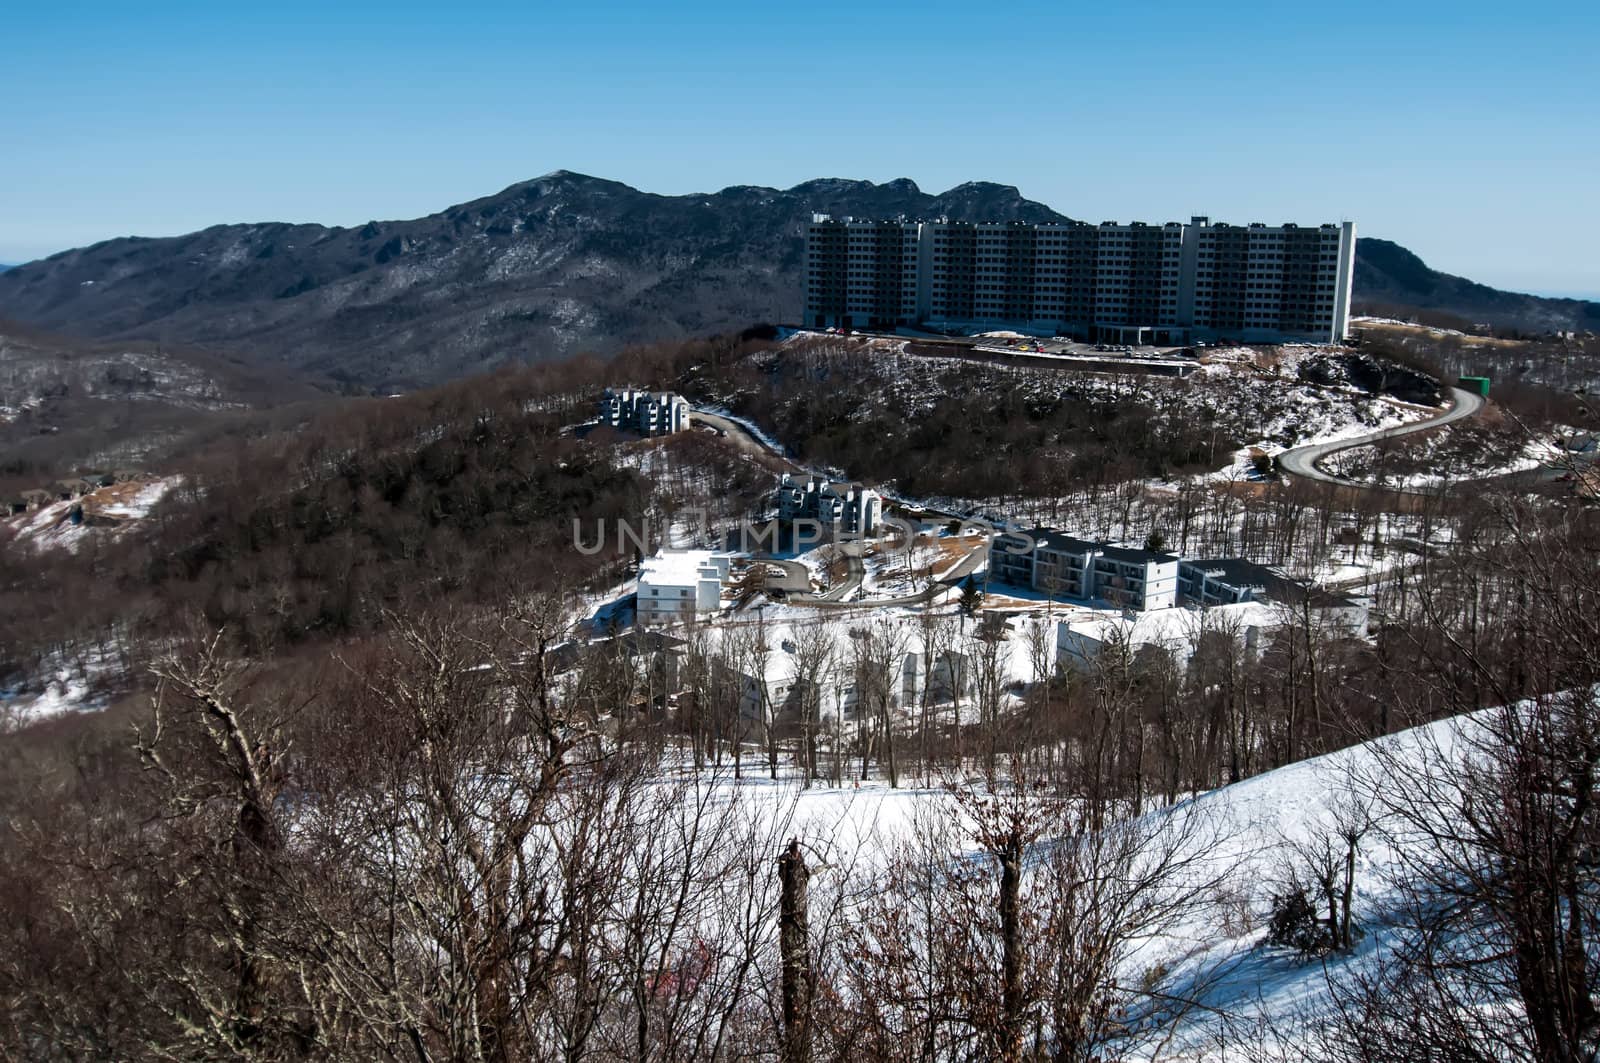 mountain hotel by digidreamgrafix